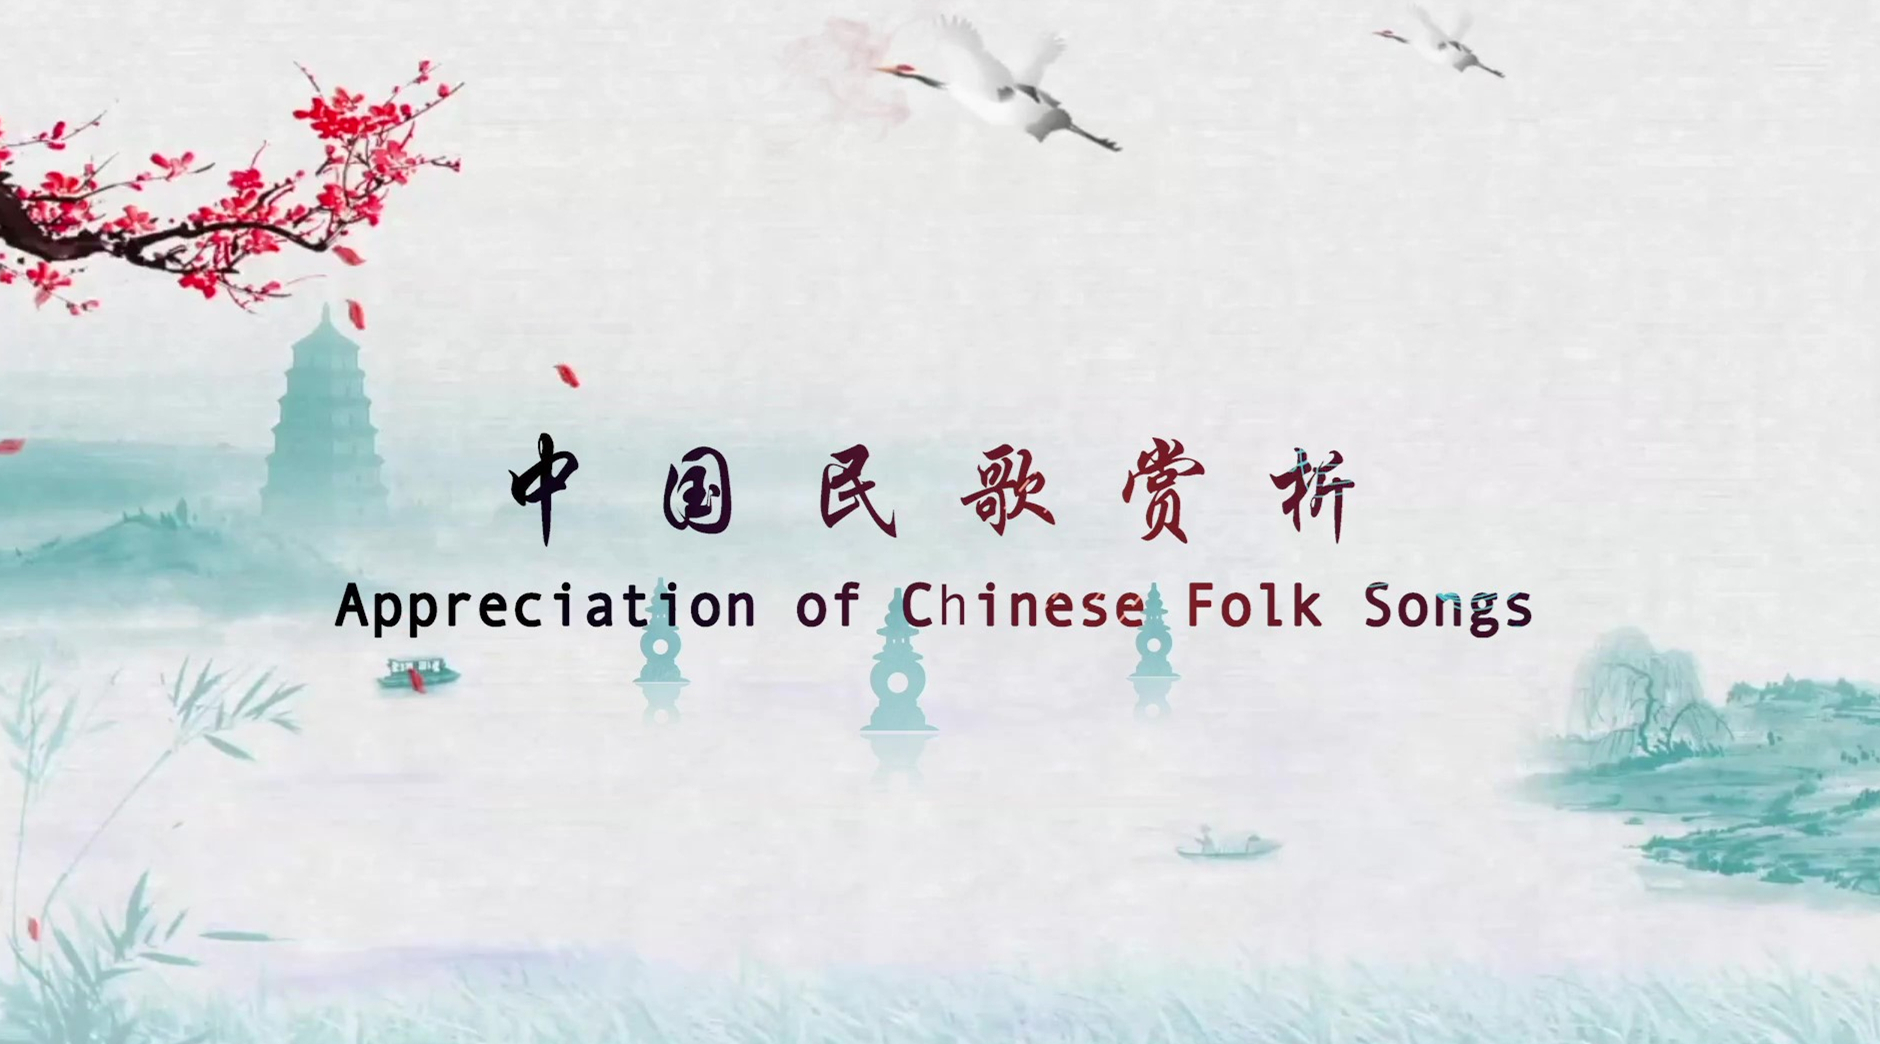 Chinese folk songs